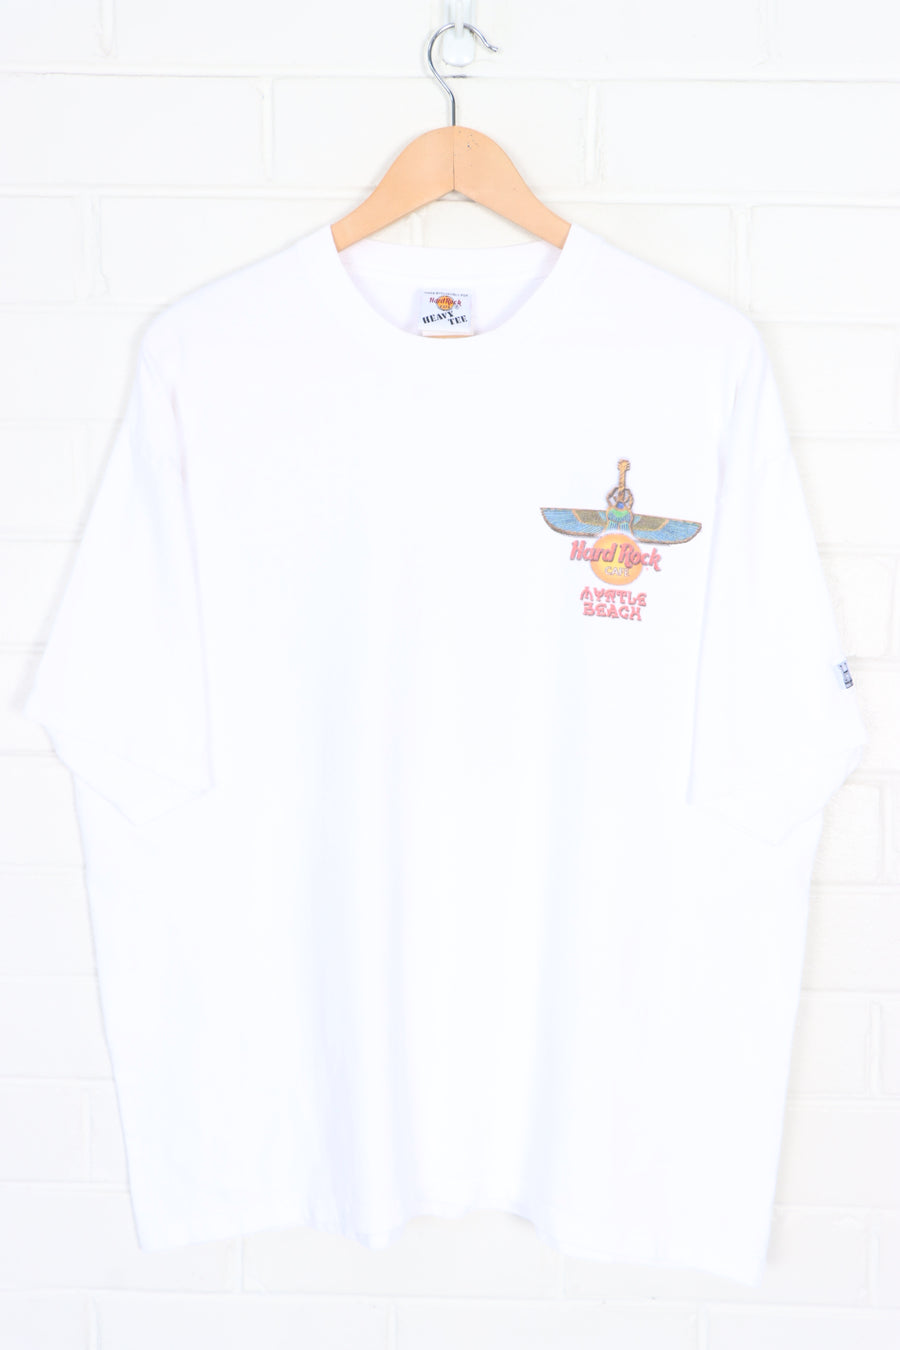 HARD ROCK CAFE Myrtle Beach Pyramid T-Shirt (XL)